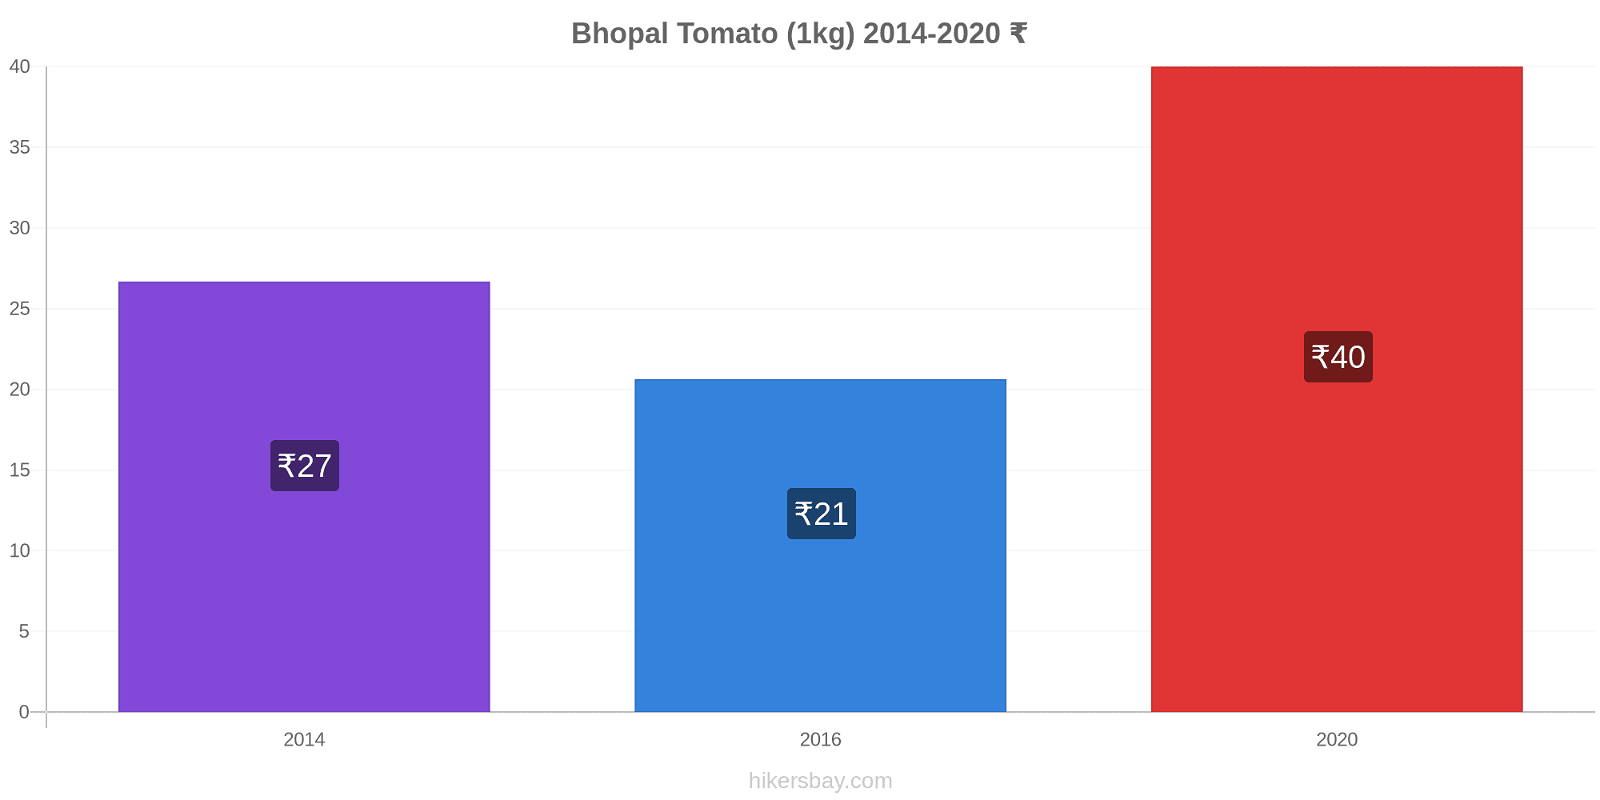 Bhopal price changes Tomato (1kg) hikersbay.com